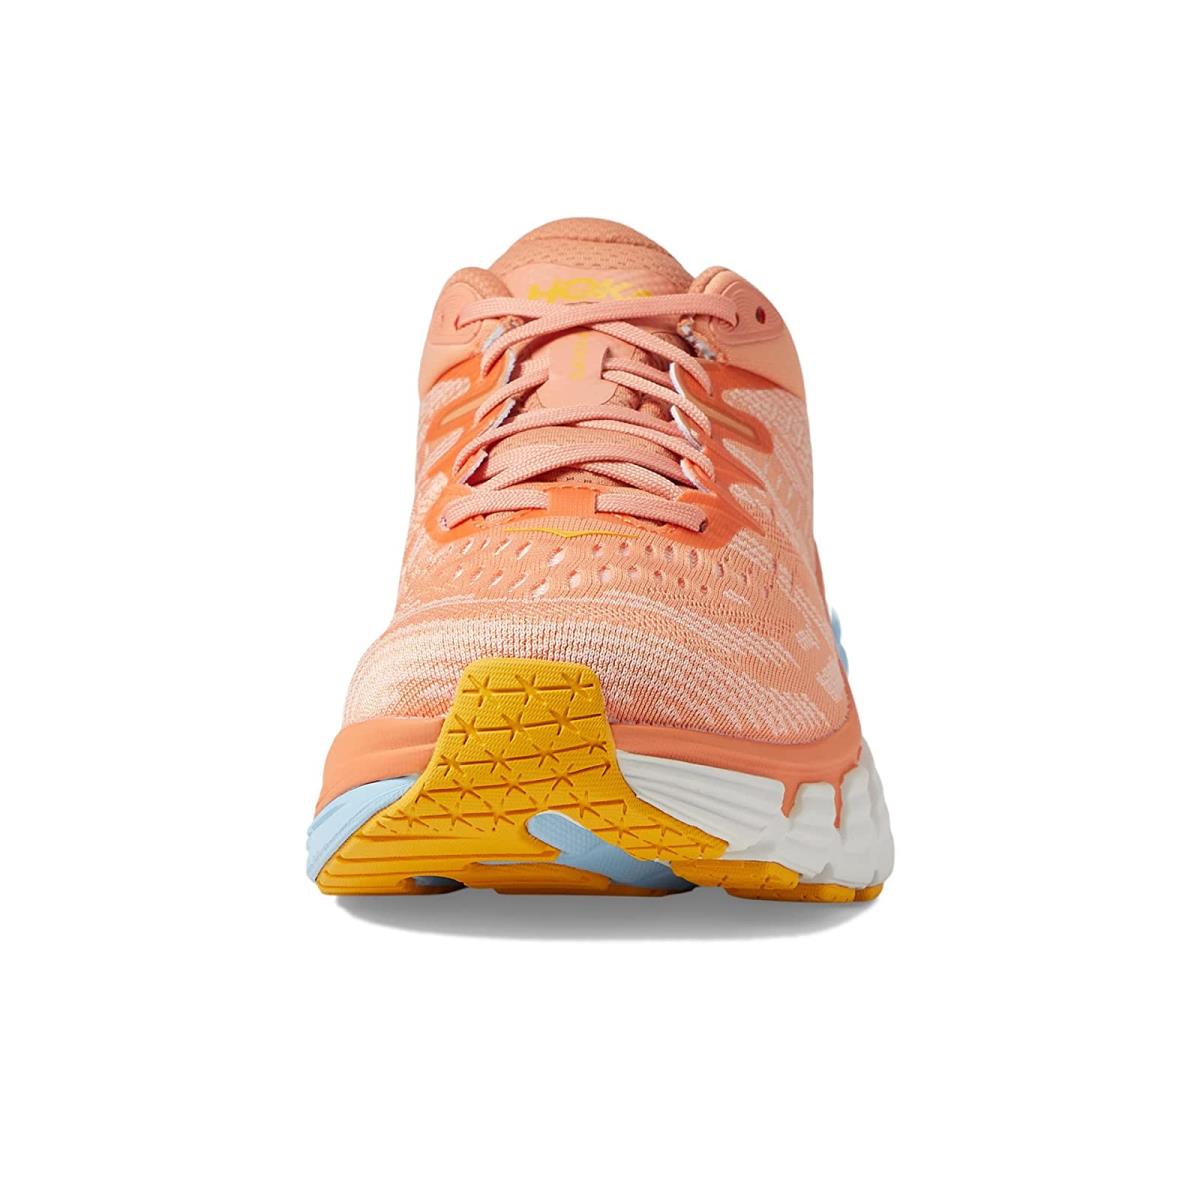 Hoka Gaviota 4 Women's Everyday Running Shoe - Shell Coral / Peach Parfait - Size 11